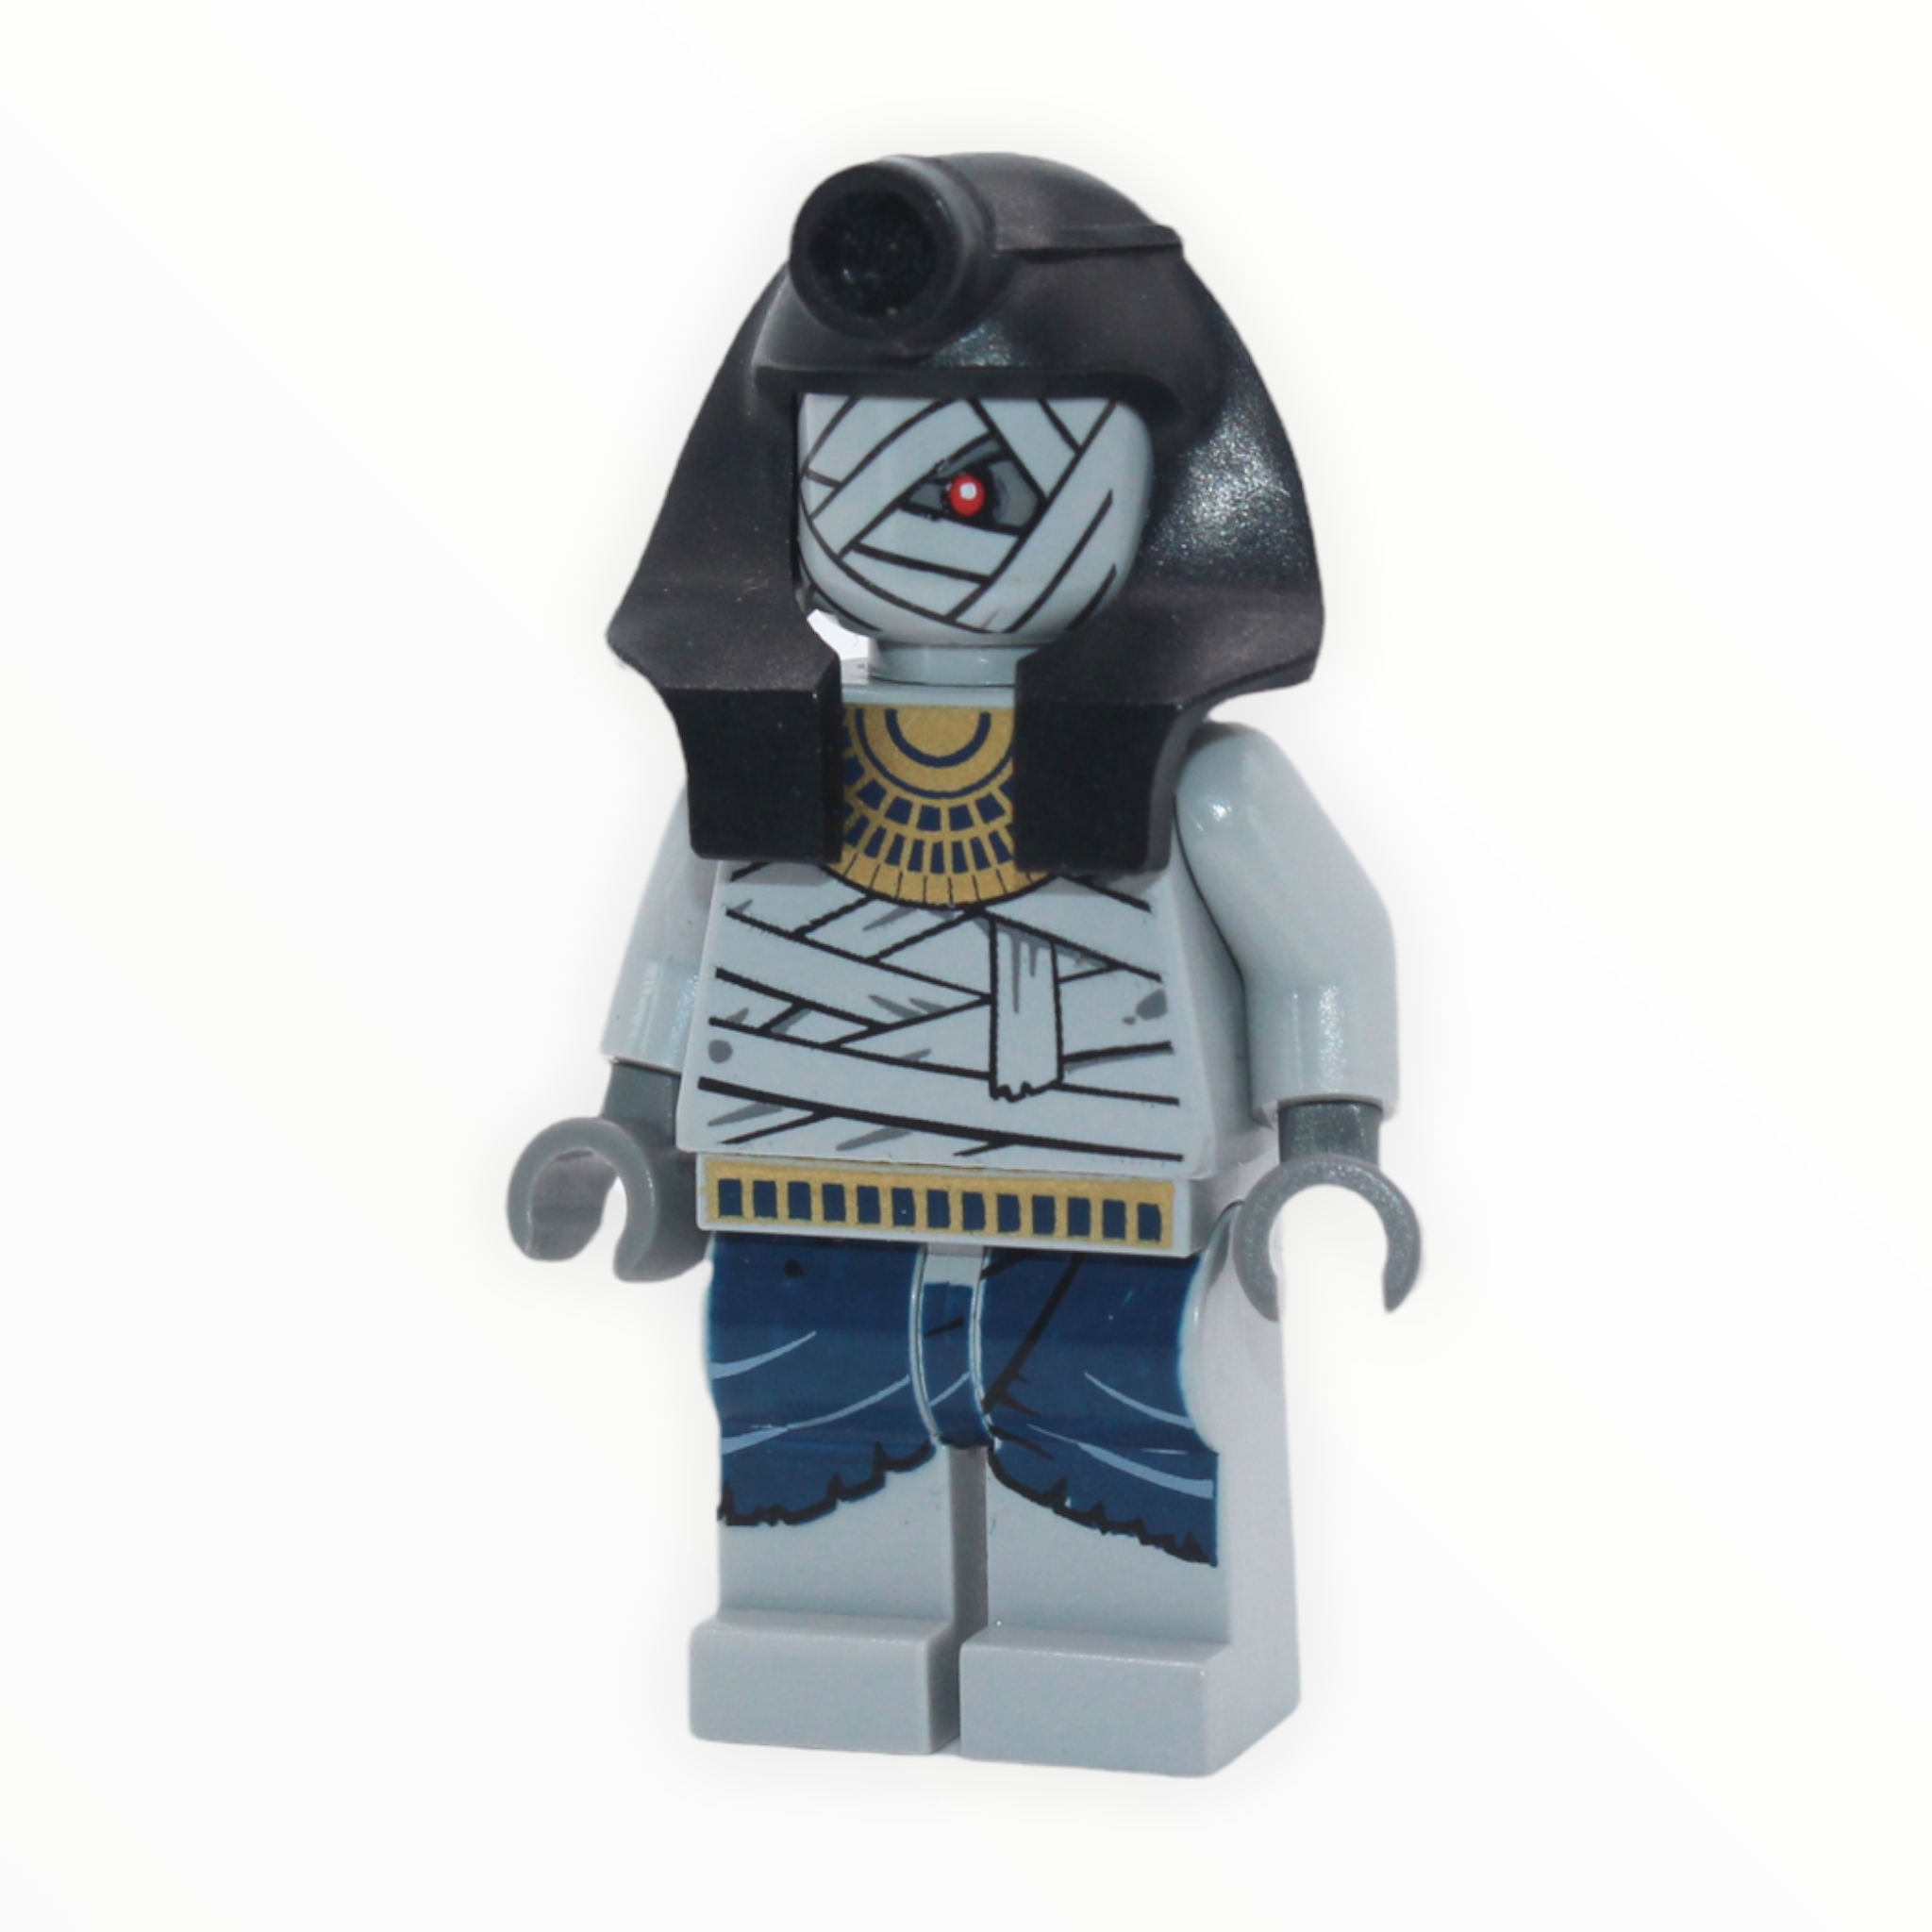 Mummy Warrior 1 (black helmet)